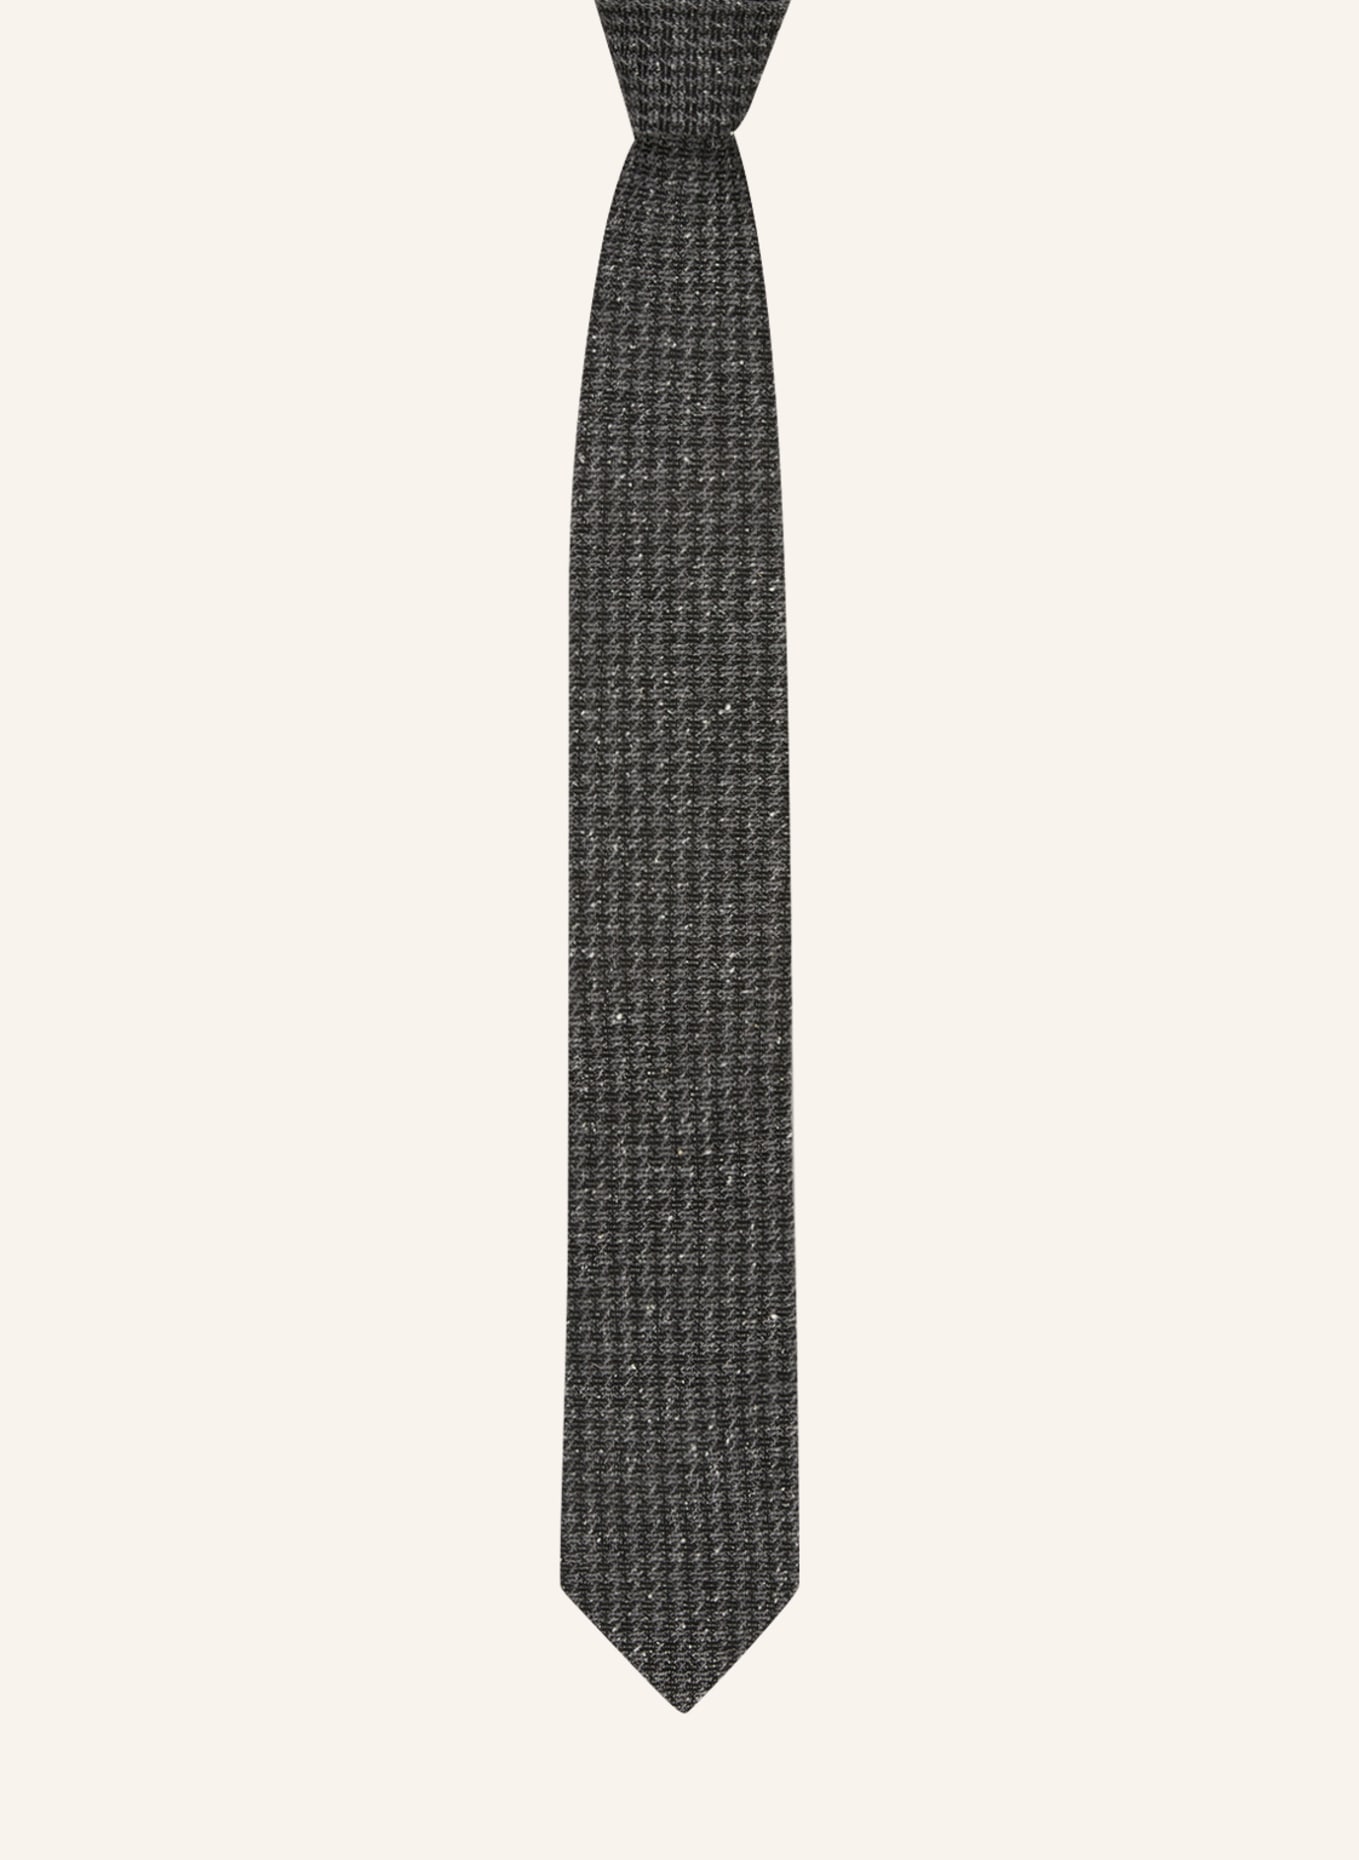 grau in OLYMP Krawatte schwarz/